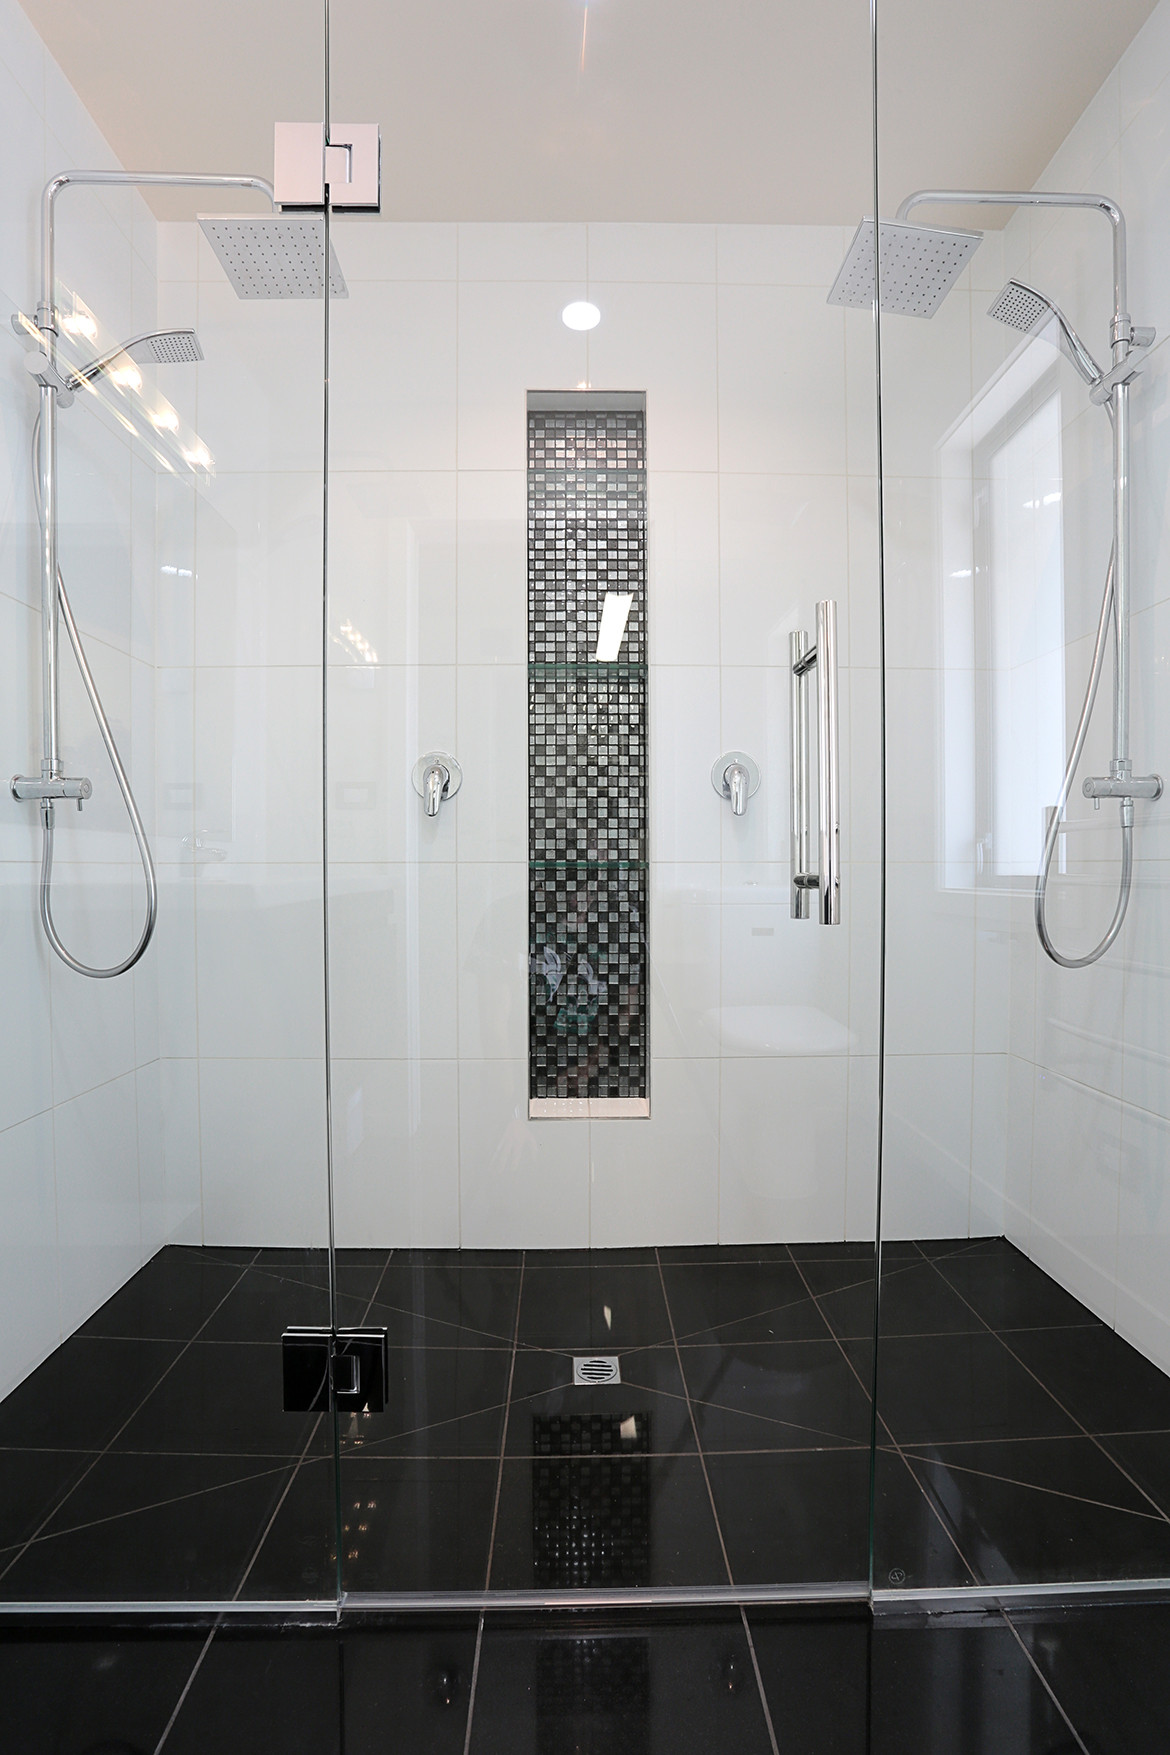 Bathroom Tiles Design Images
 Bathrooms Inspiration